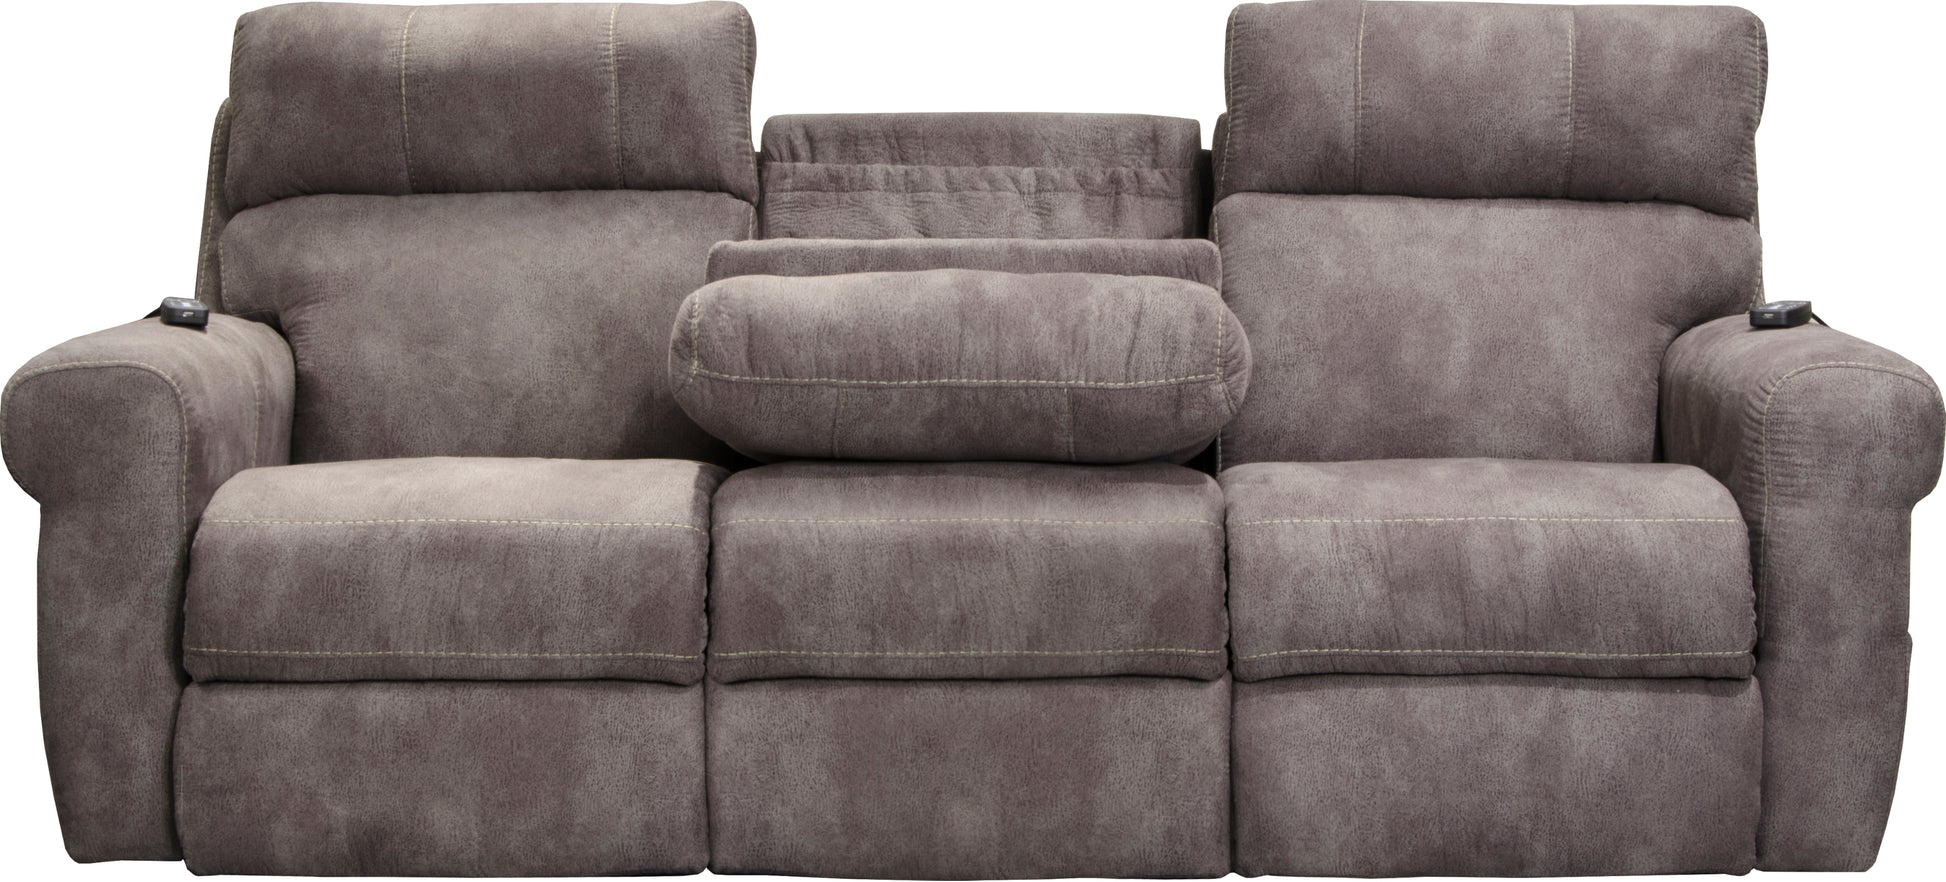 Catnapper Tranquility Pewter Three Way Power Reclining Sofa Legacy Furniture Mattress